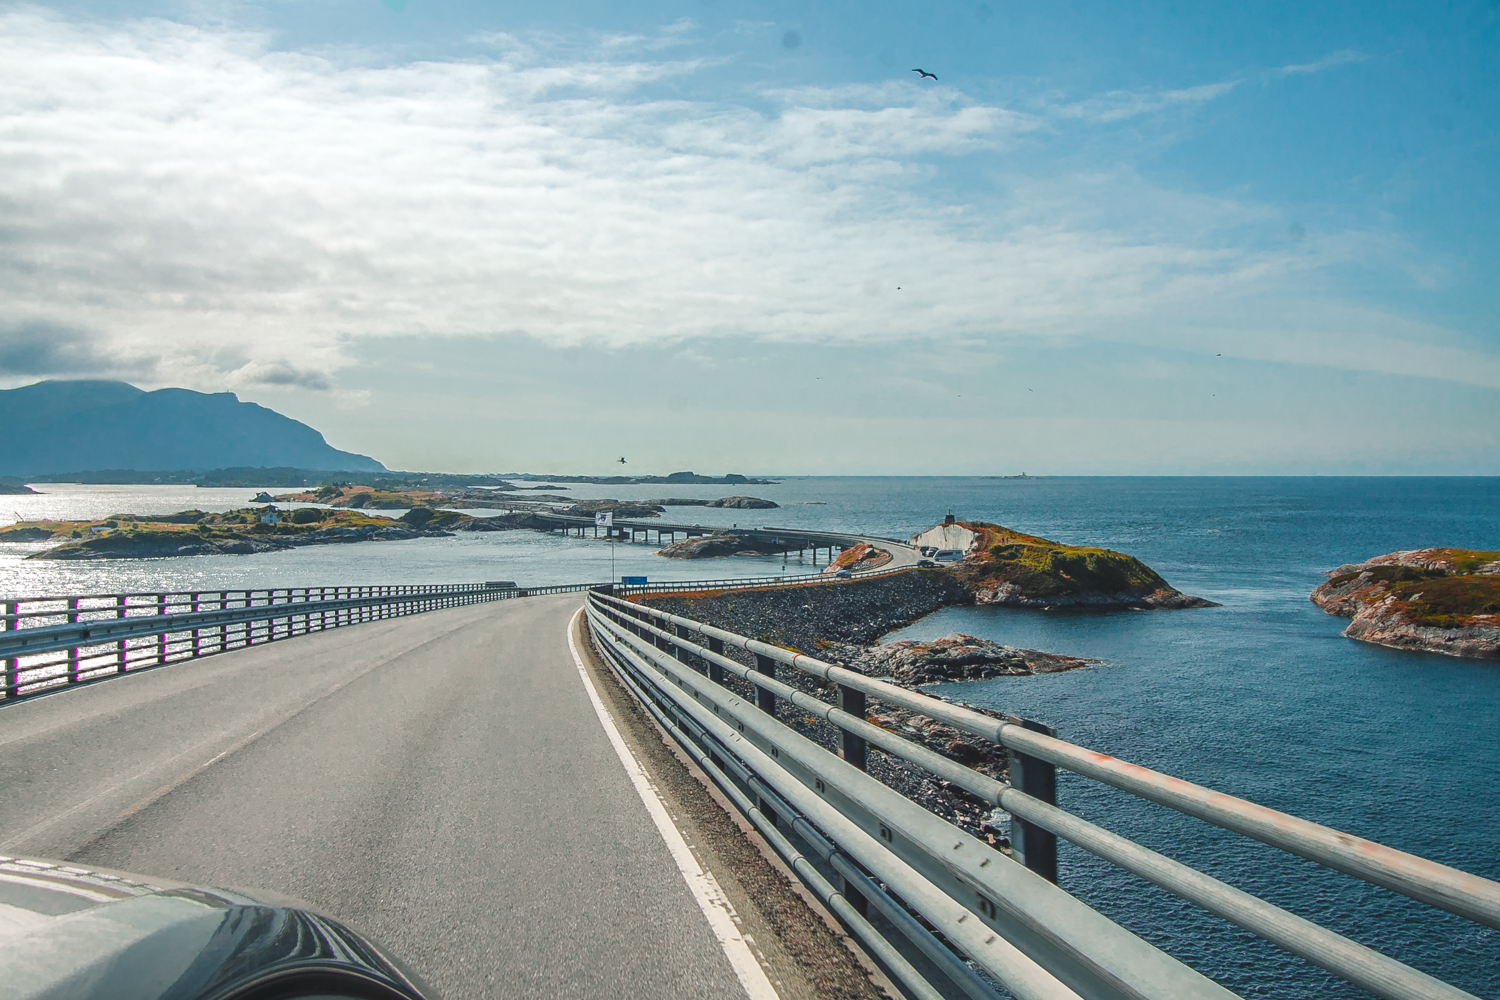  Droga Atlantycka atrakcje norwegii